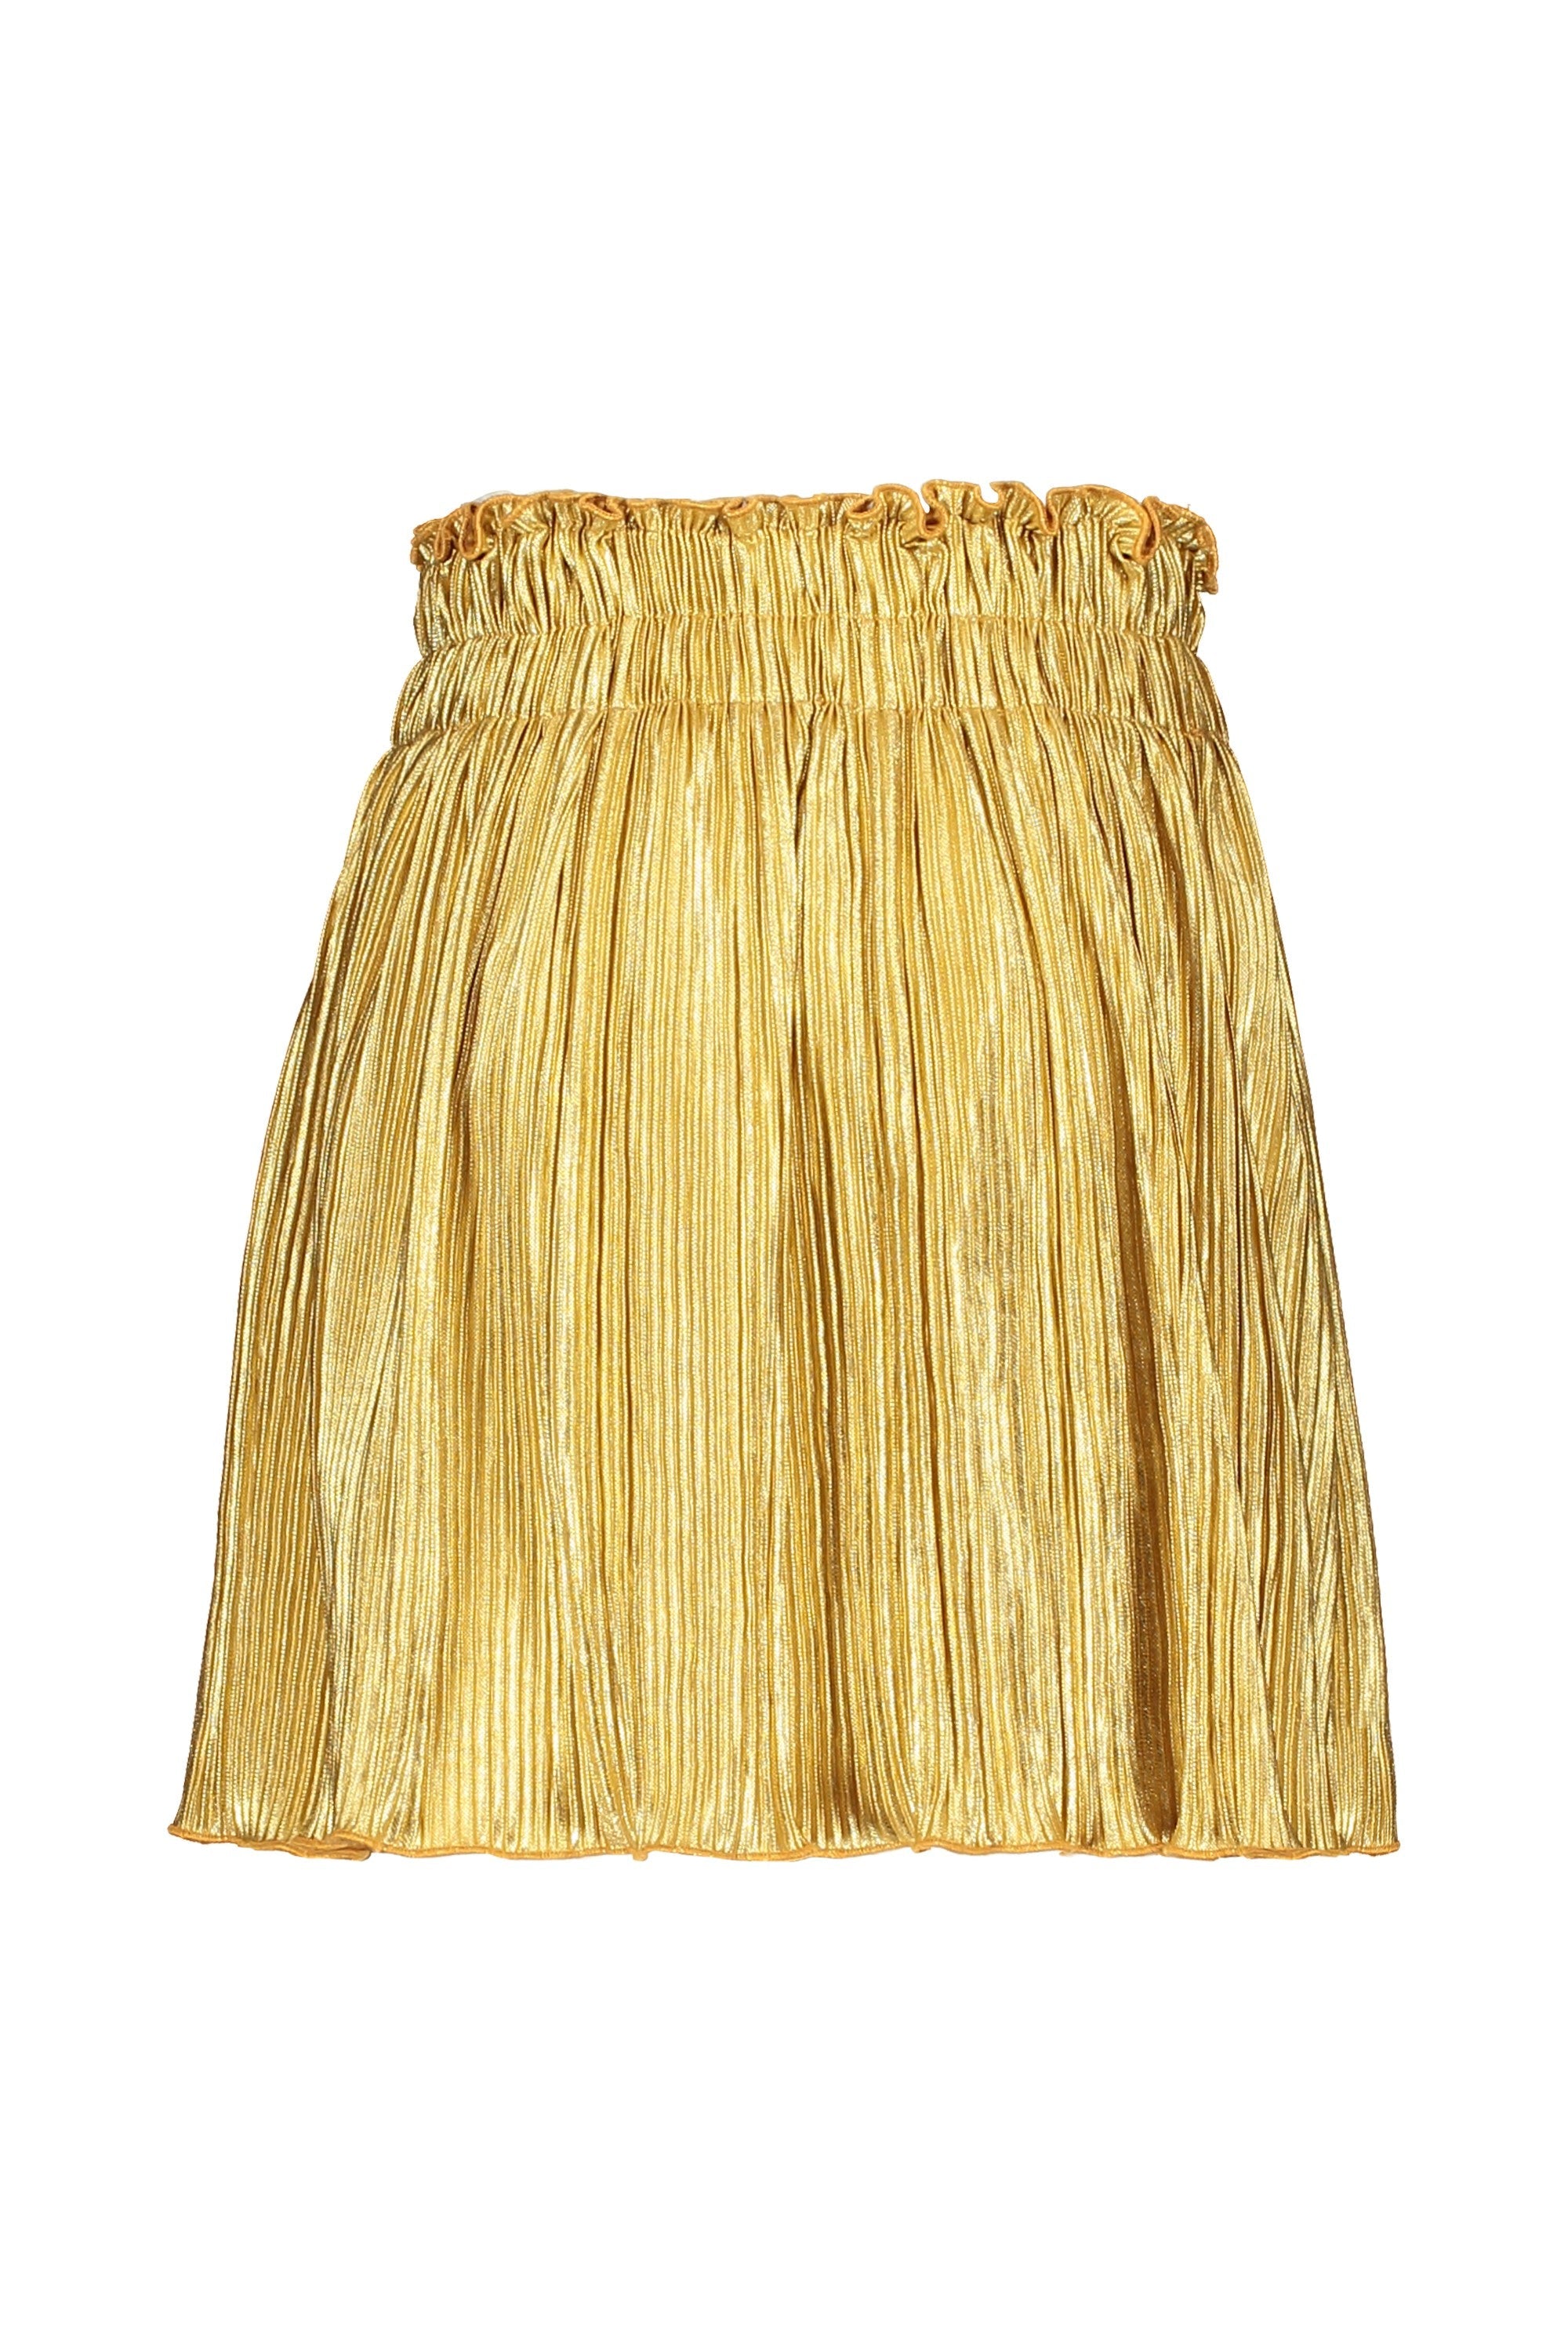 Meisjes Satin Plisse Skirt van Like Flo in de kleur Gold in maat 152.